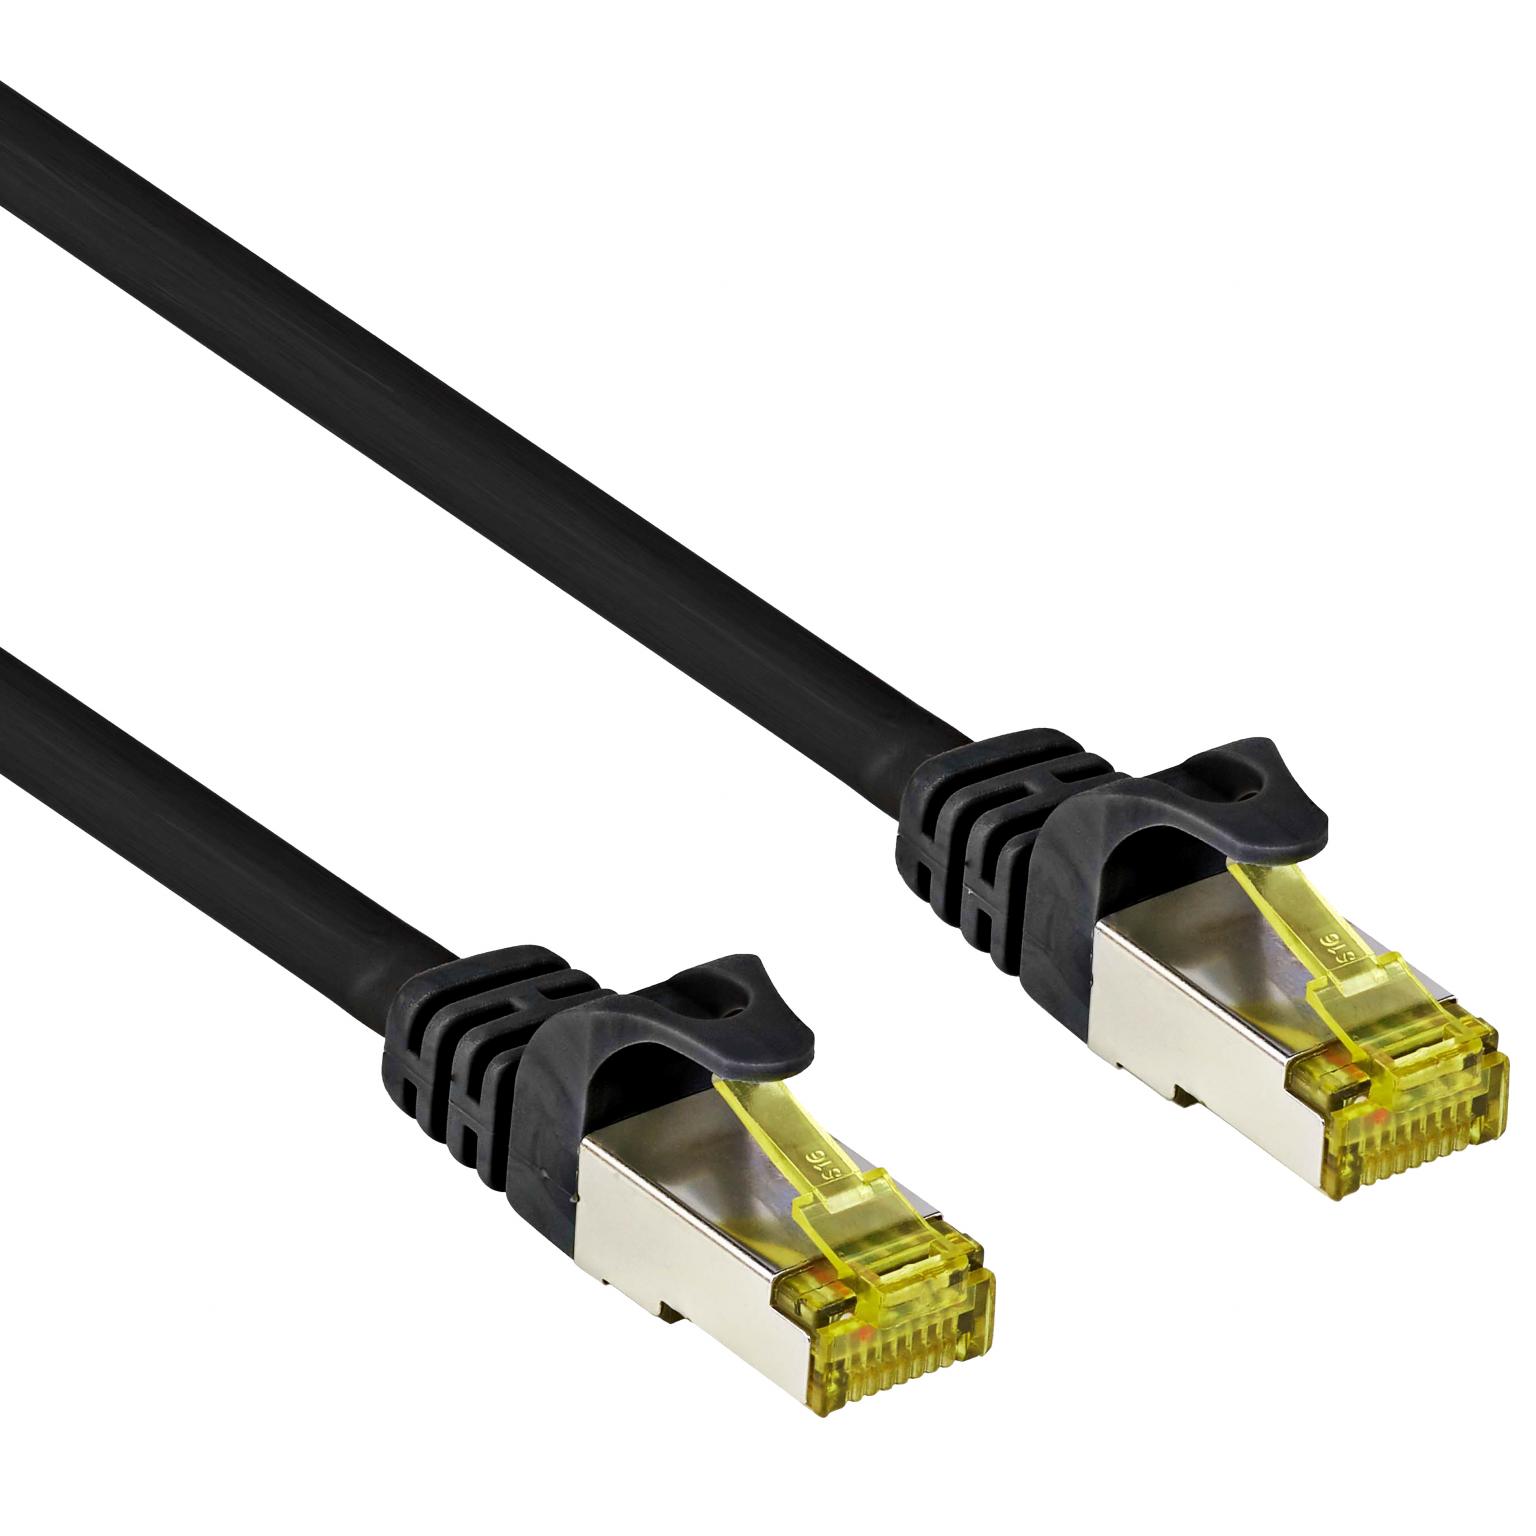 S/FTP kabel - 0.25 meter - Zwart - Allteq